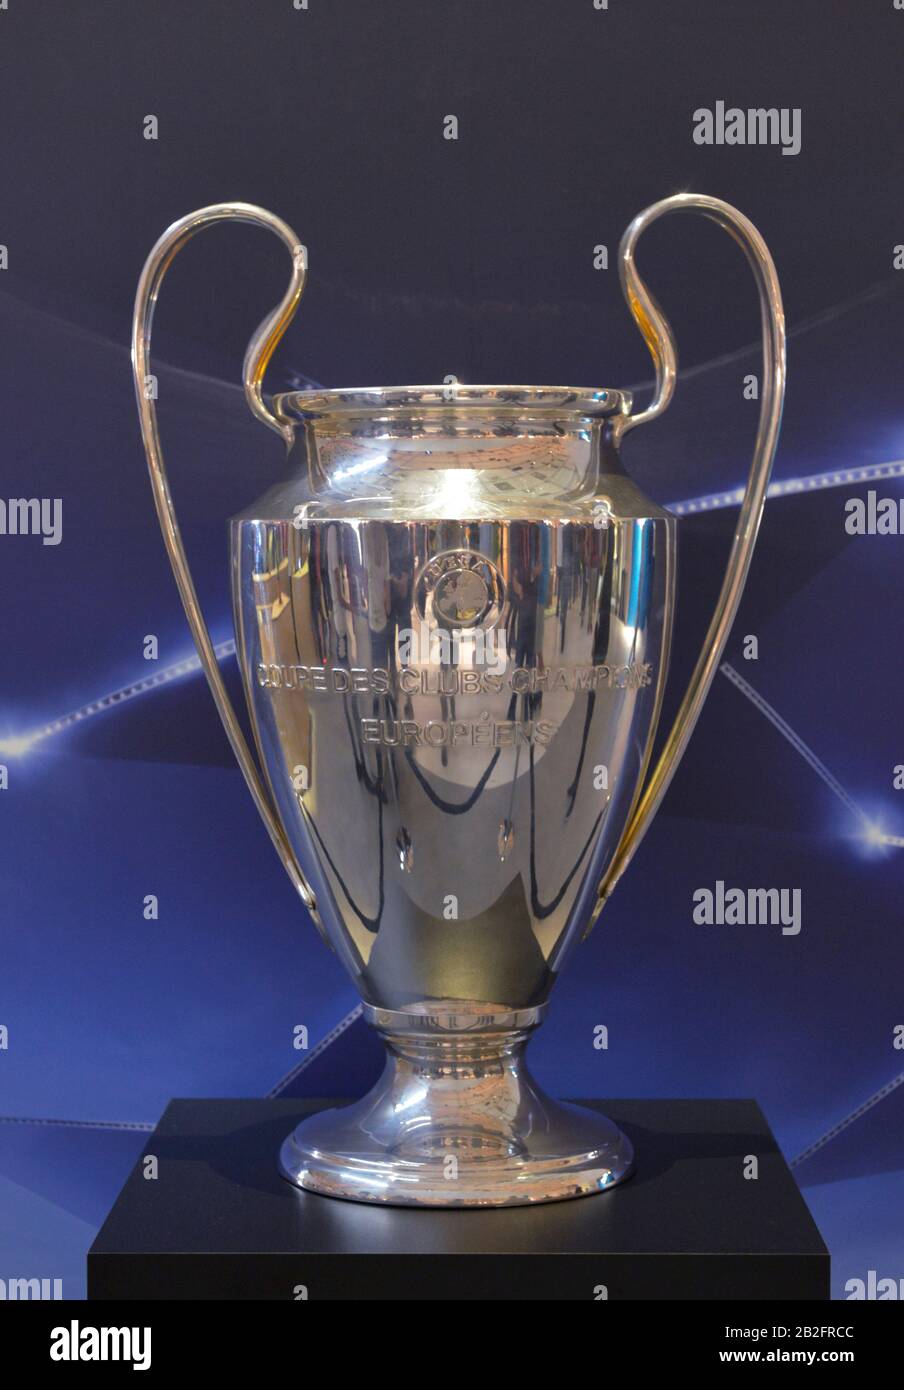 Champions league pokal -Fotos und -Bildmaterial in hoher Auflösung – Alamy